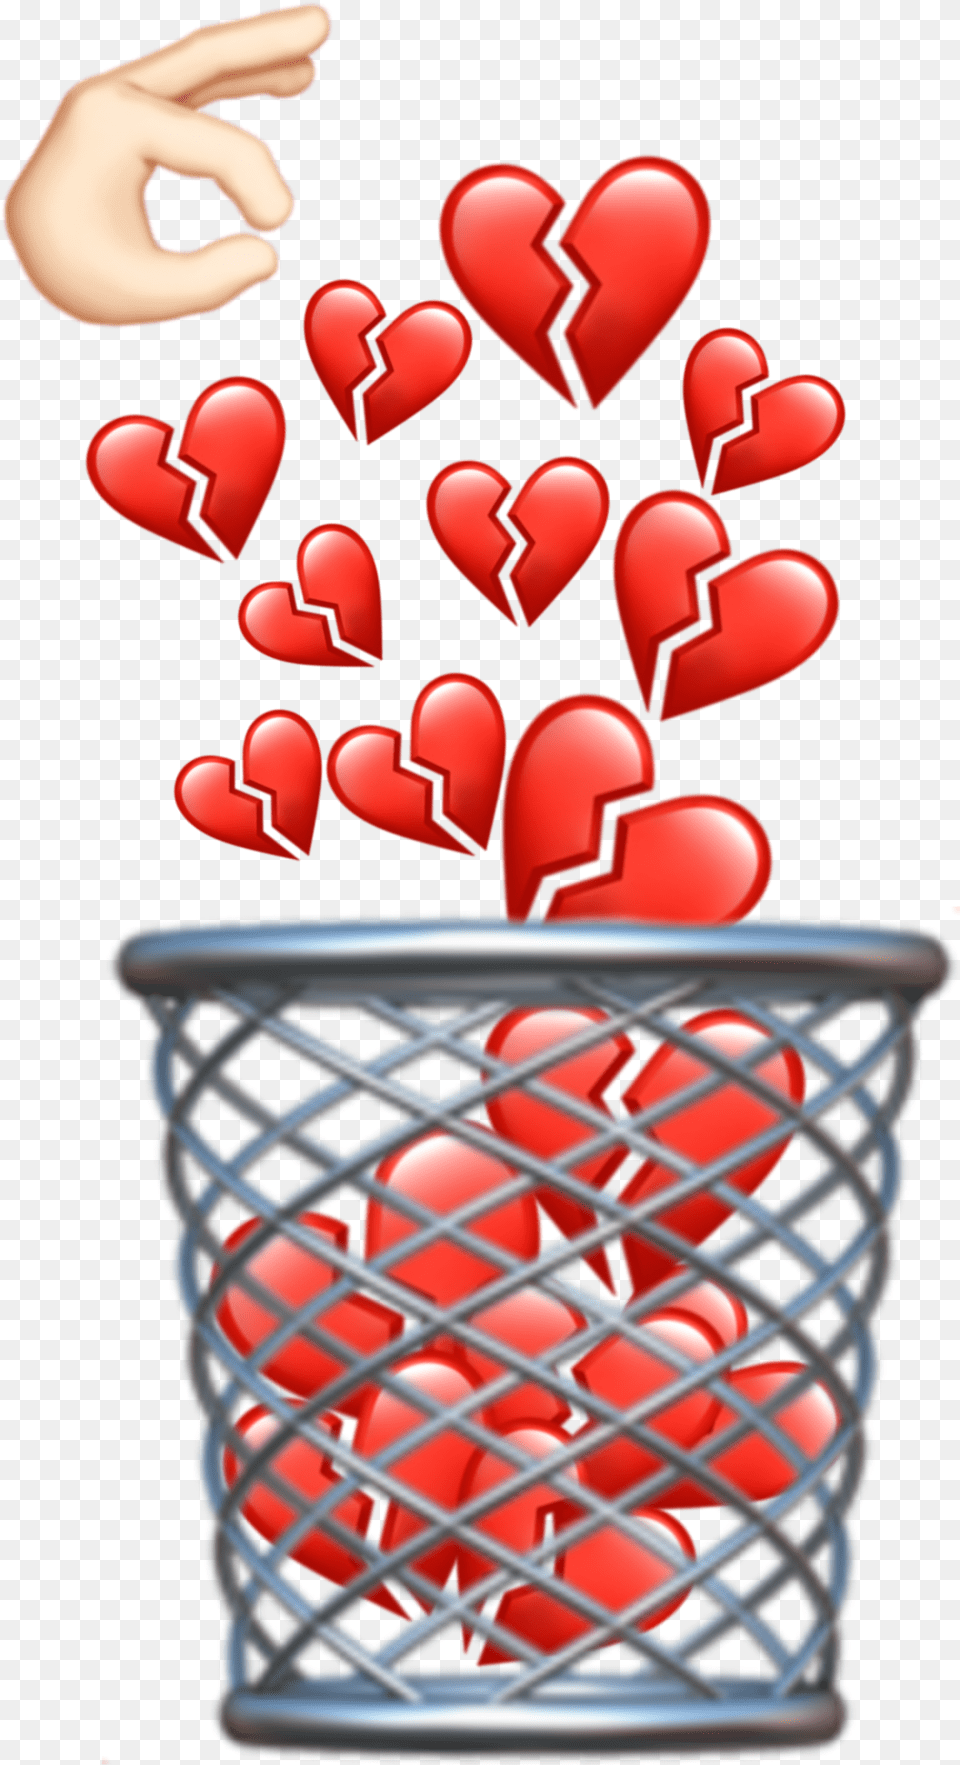 Brokenheart Trash Dump Brokenlove Nolove Trash Can Emoji, Heart, Balloon, Food, Ketchup Free Transparent Png